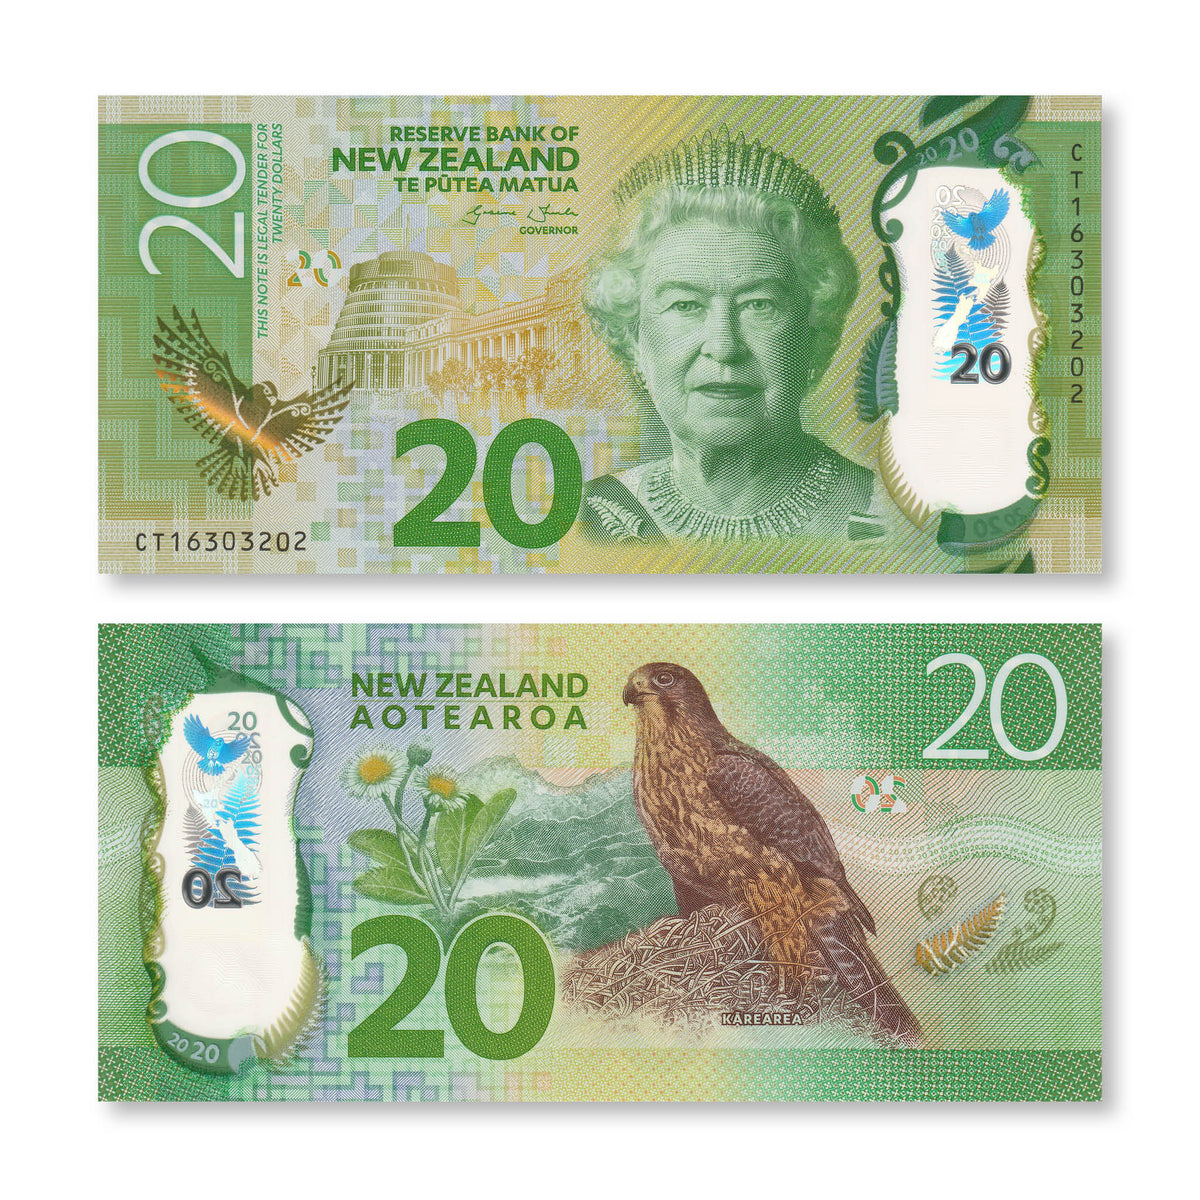 New Zealand 20 Dollars, 2016, B139a, P193, UNC - Robert's World Money - World Banknotes